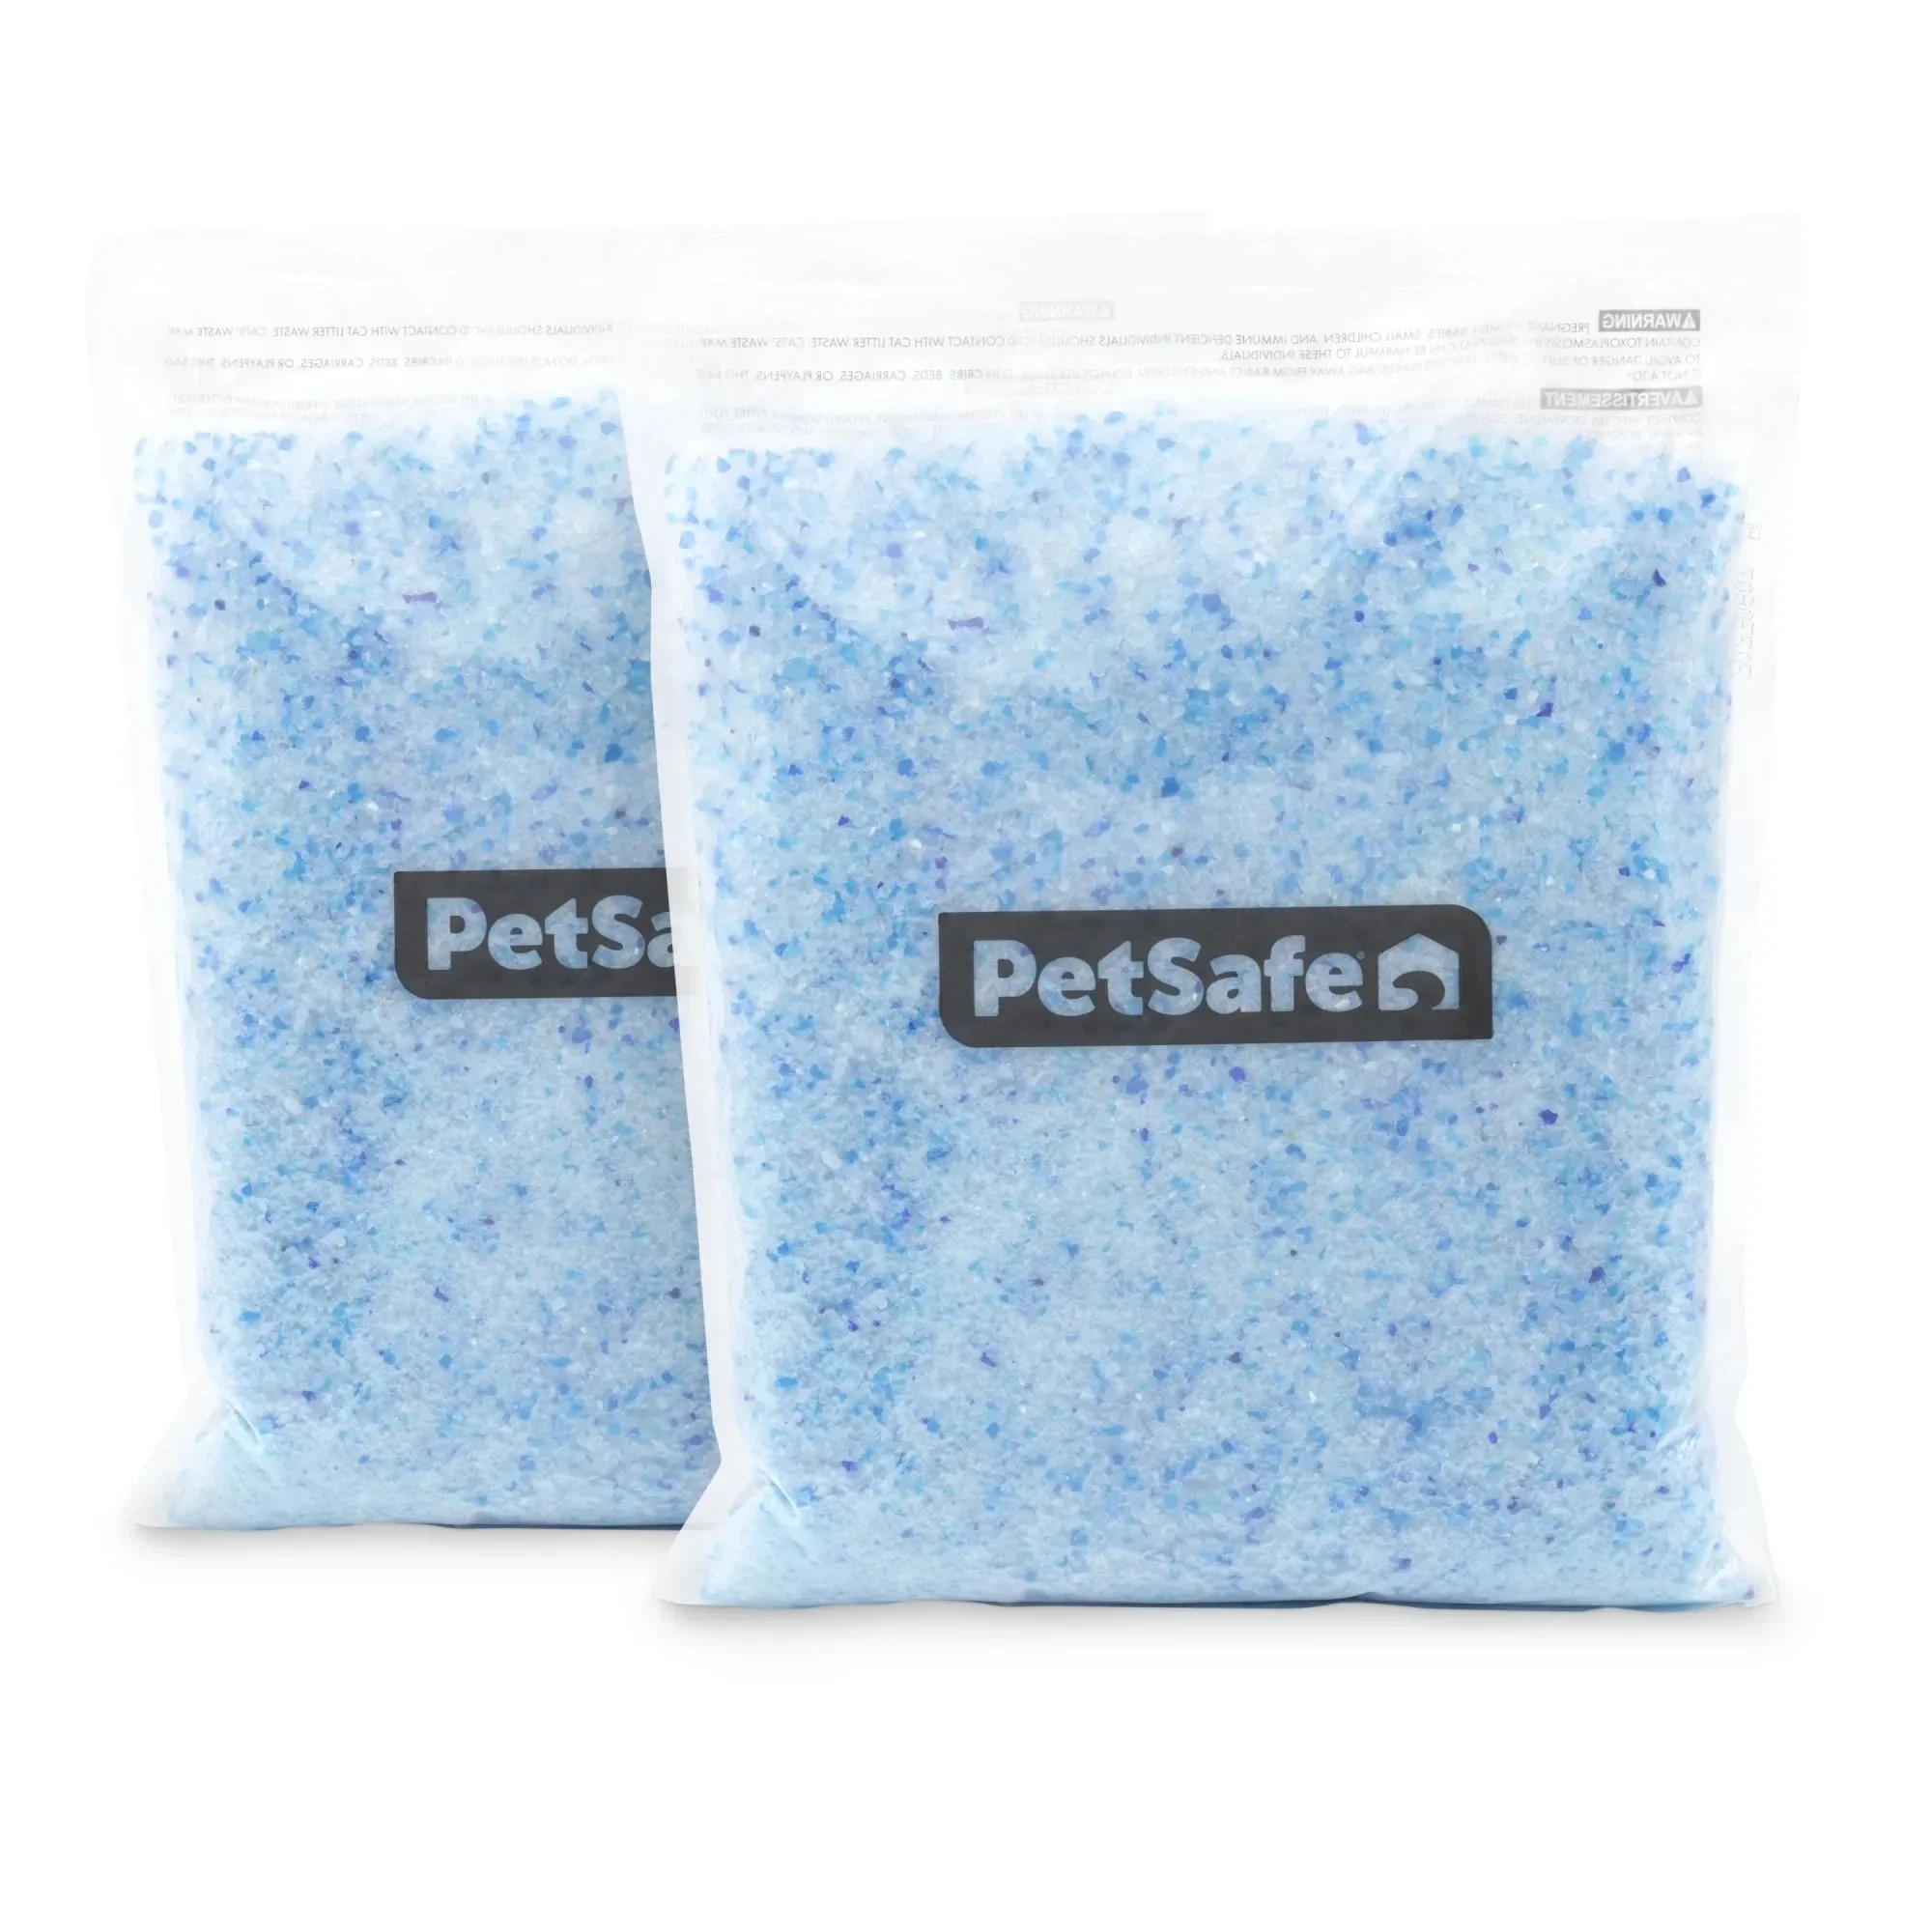 

ScoopFree Premium Crystal Cat Litter Bags, Fresh Scent, Silica Crystals, 4.3 lb ea 2-Pack